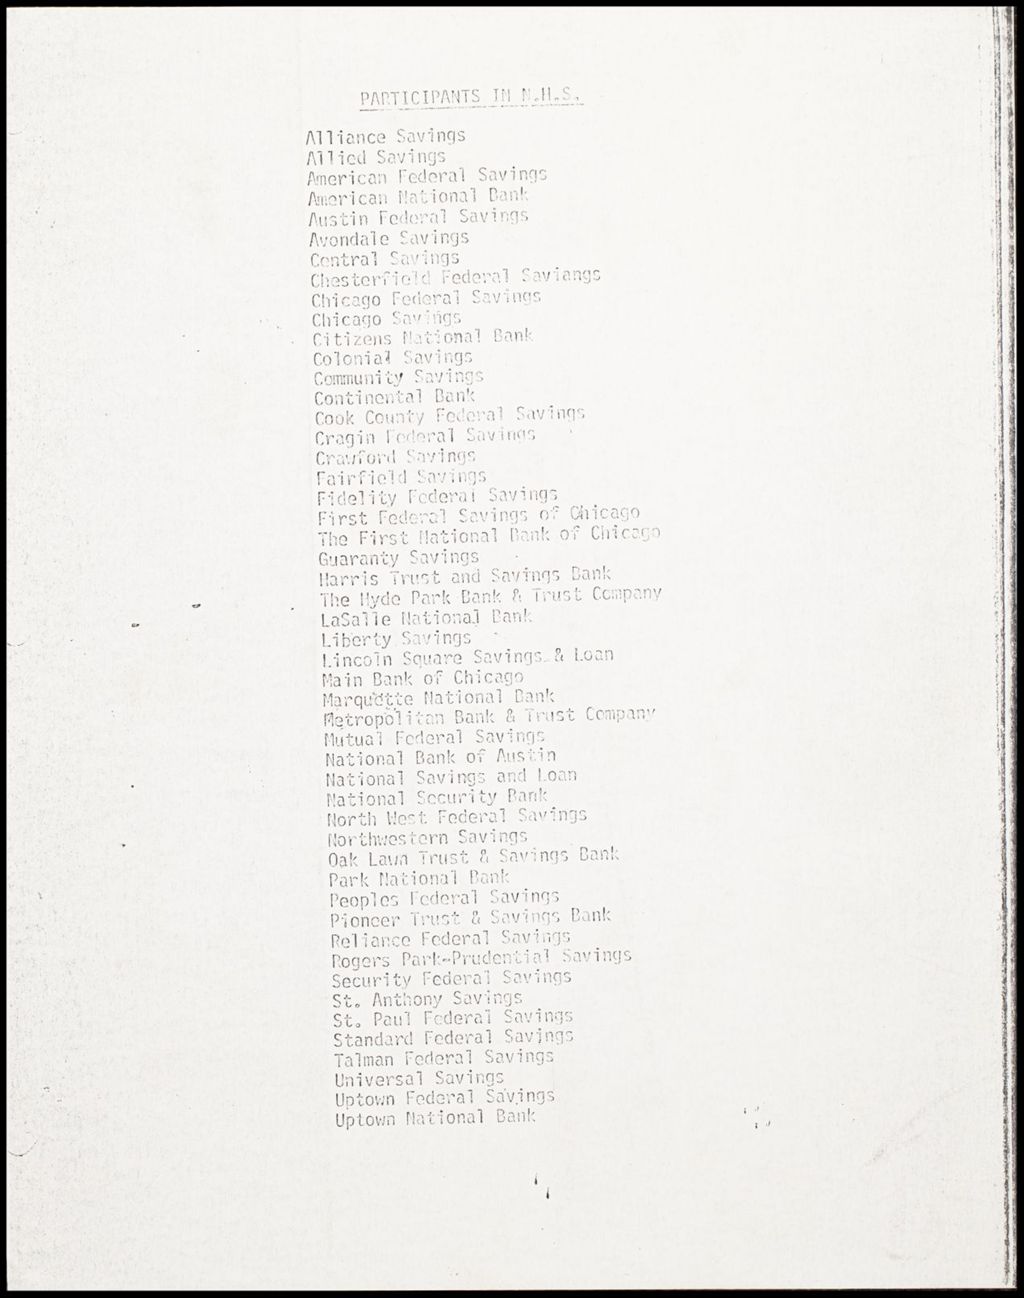 Miniature of Task Force on Racial Problems, 1976 (Folder II-2263)